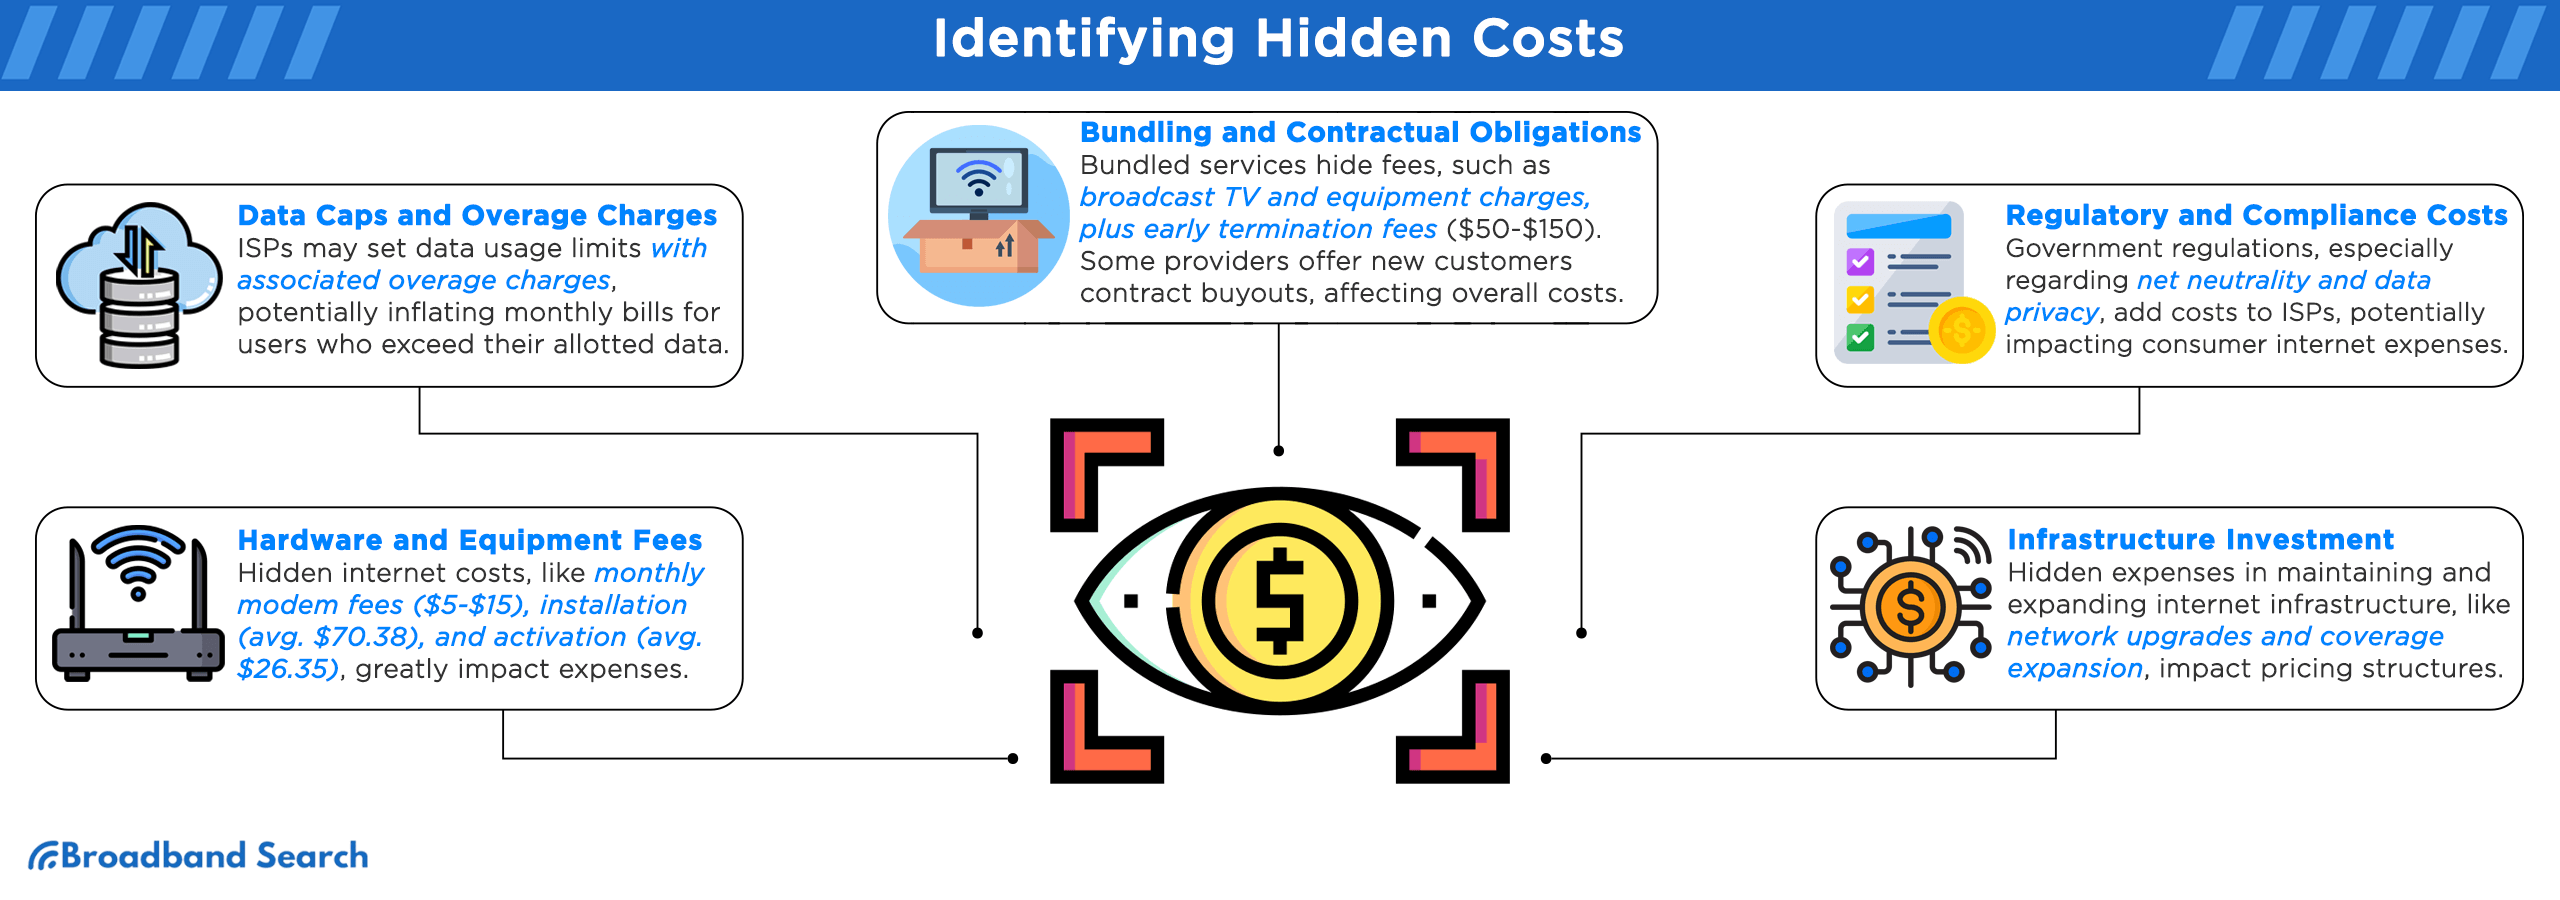 Identifying hidden costs